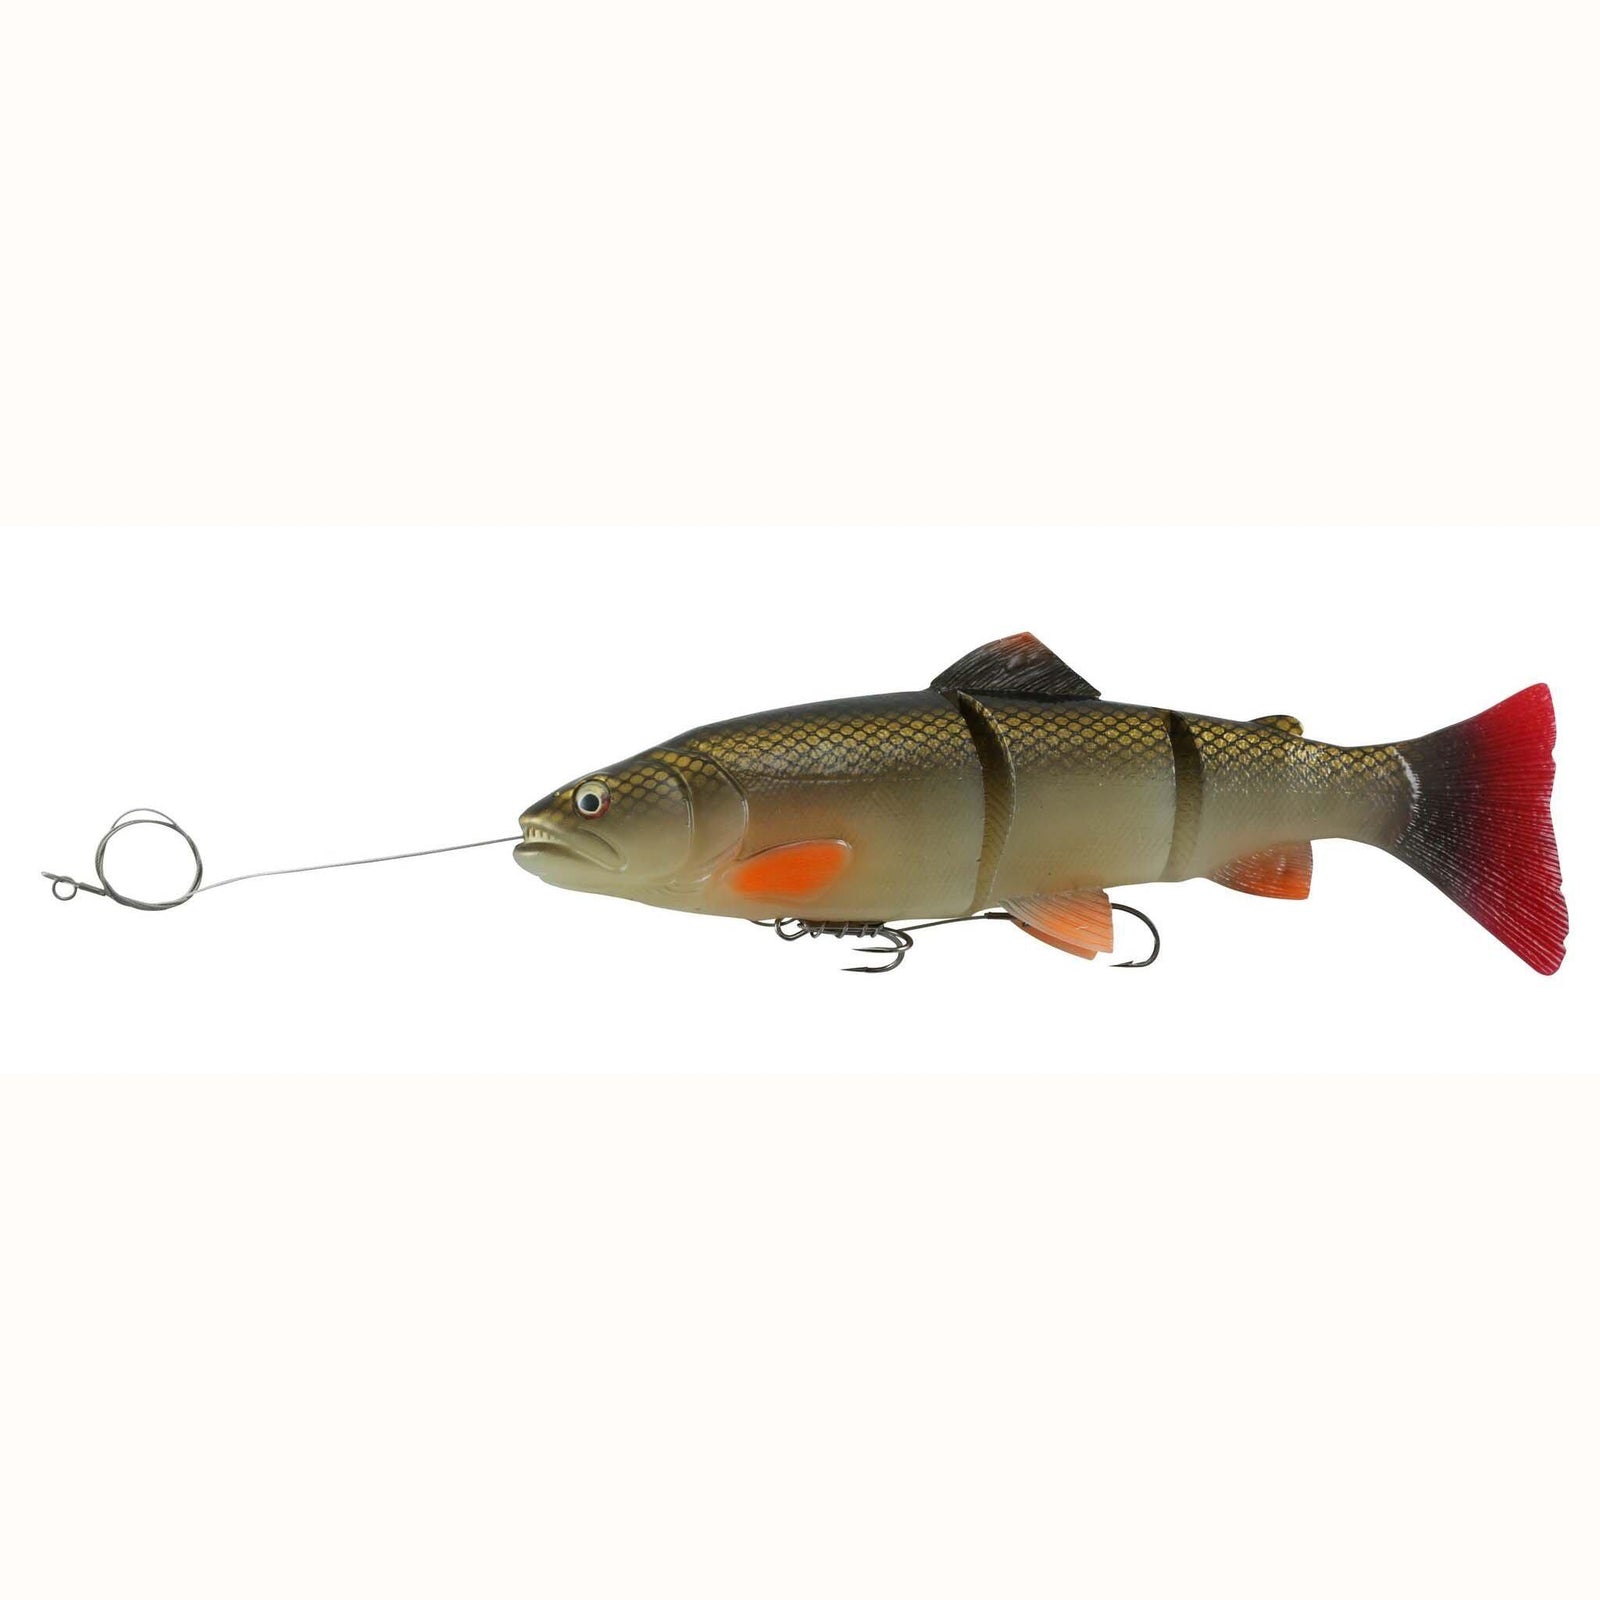 Life Like Swimbait Bass Fishing Bait Fish Trap Set With DHL